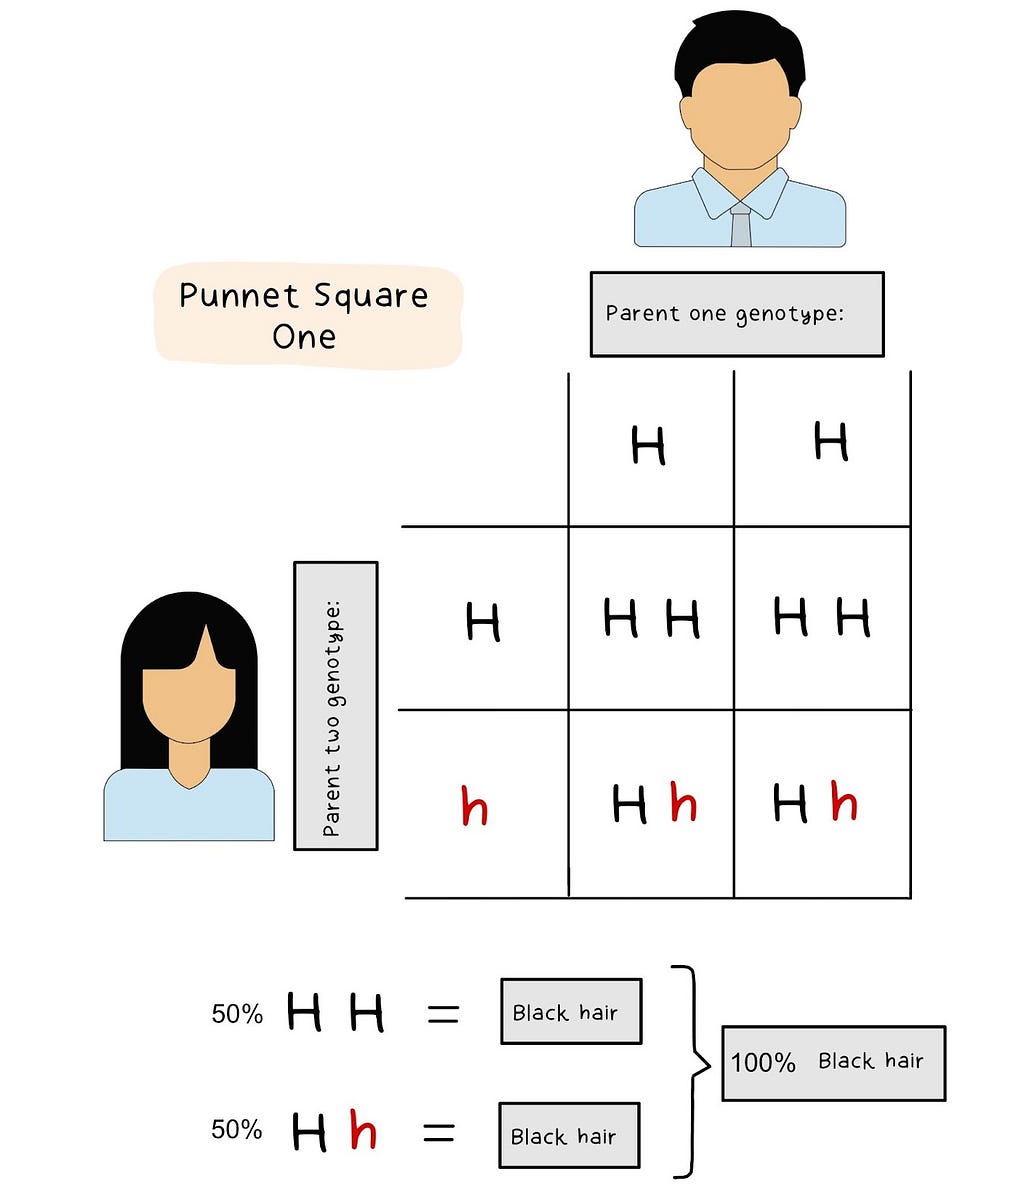 Punnet square. Both parents have black hair